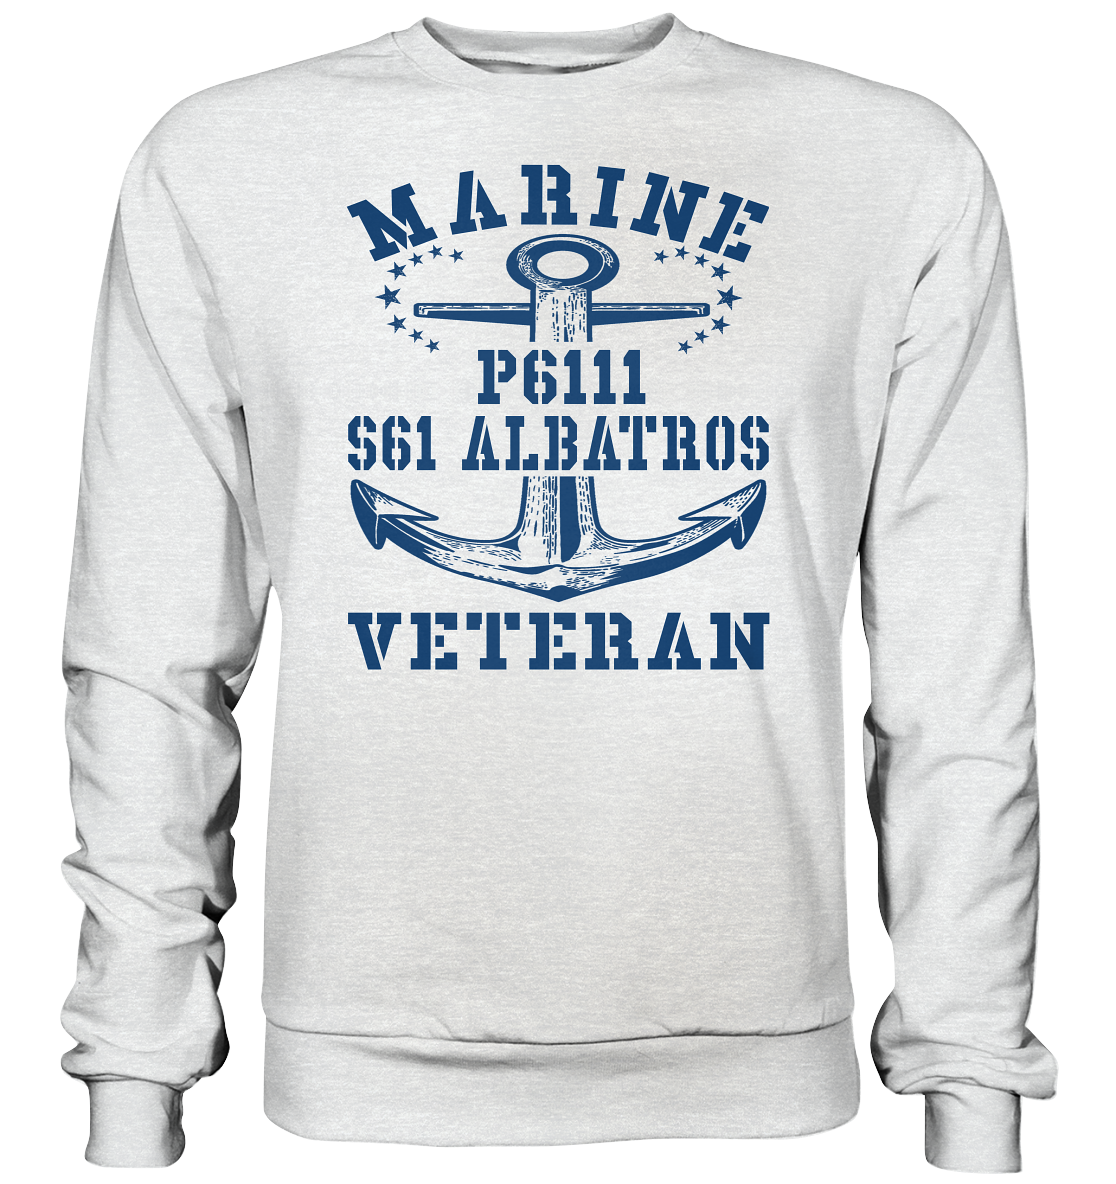 FK-Schnellboot P6111 ALBATROS Marine Veteran - Premium Sweatshirt